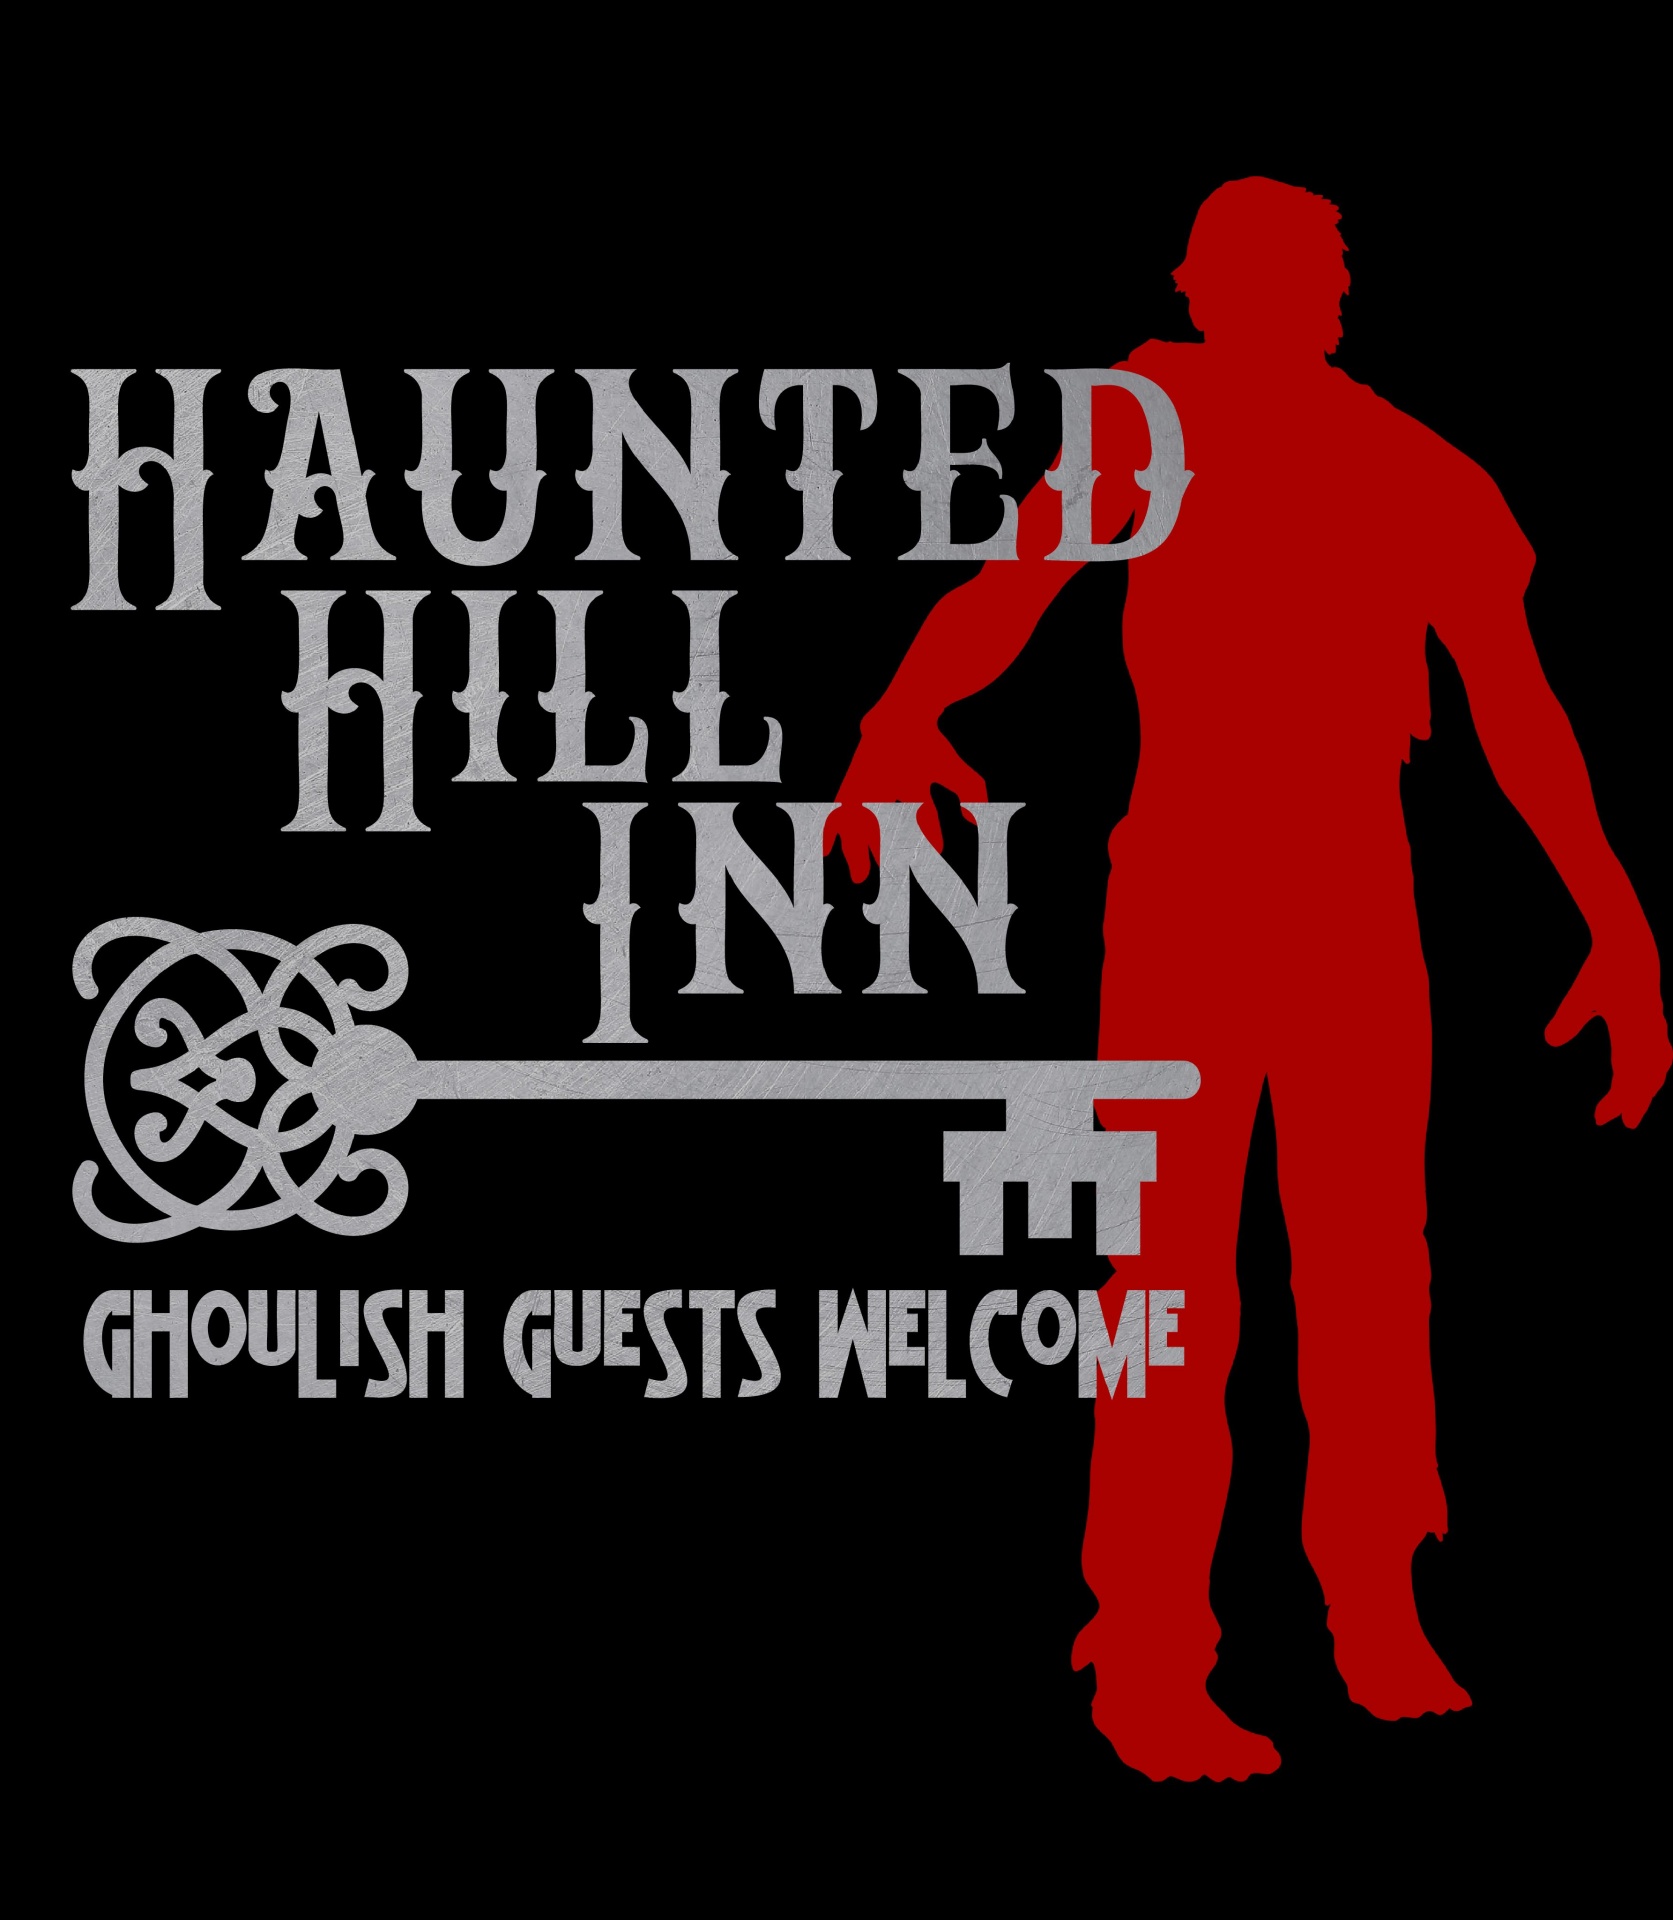 Halloween Haunted Hill Inn Poster